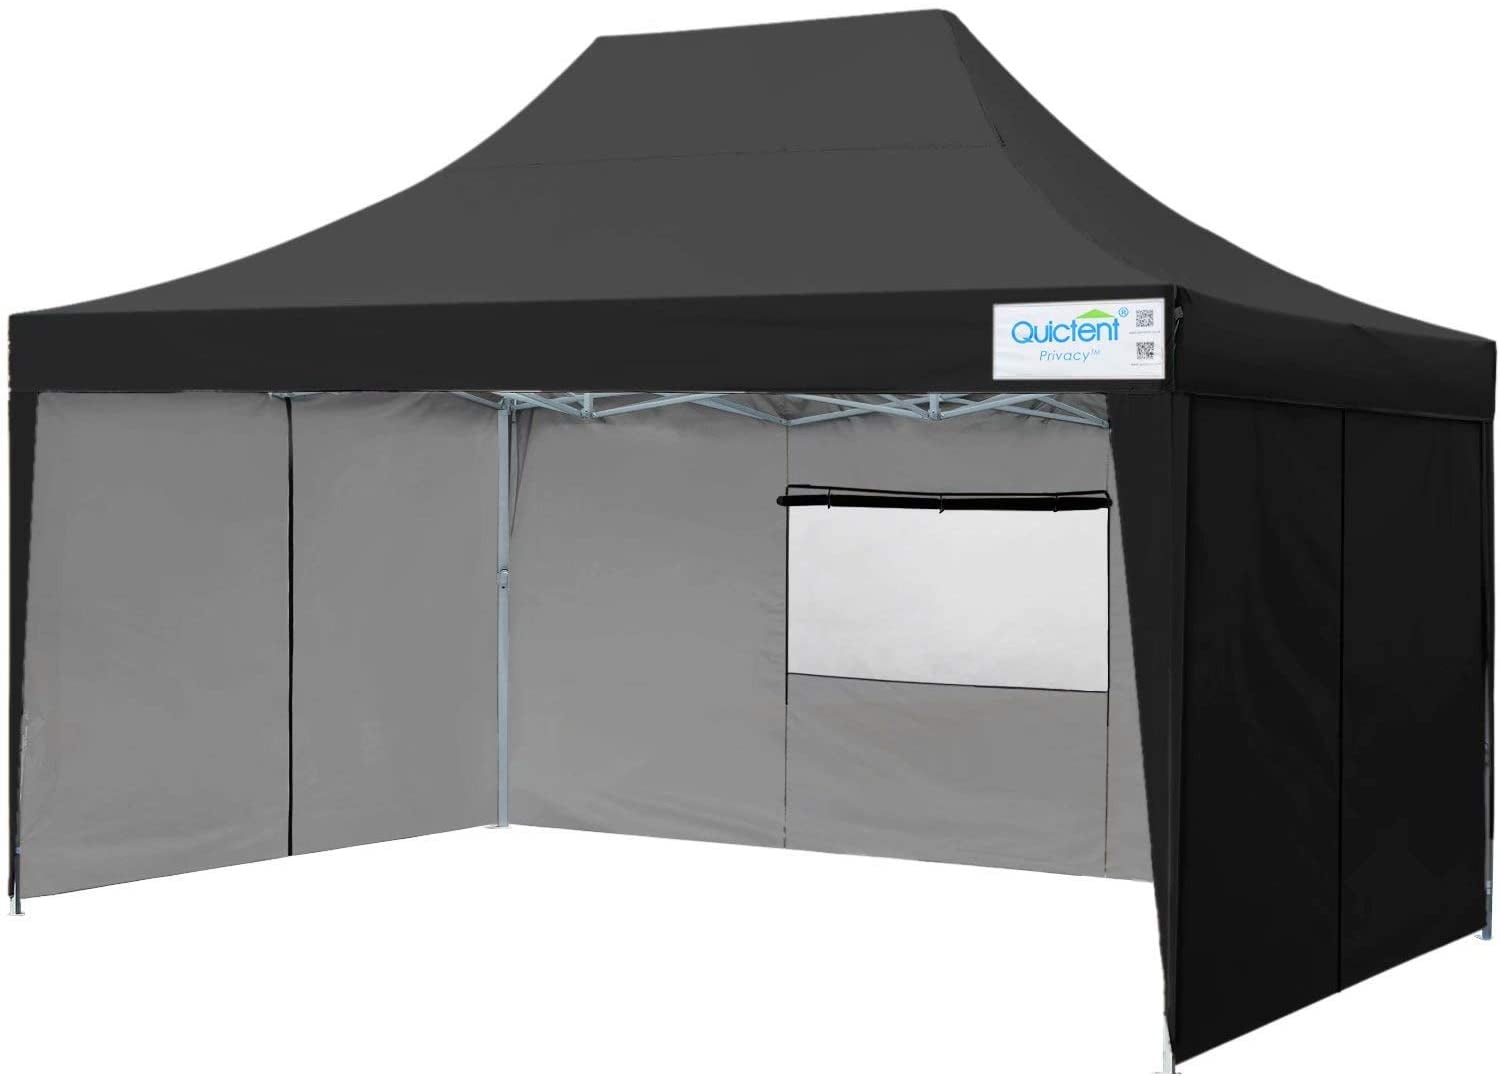 5 Colors Available 8' x 8' Pop Up Canopy Party Tent Gazebo EZ 